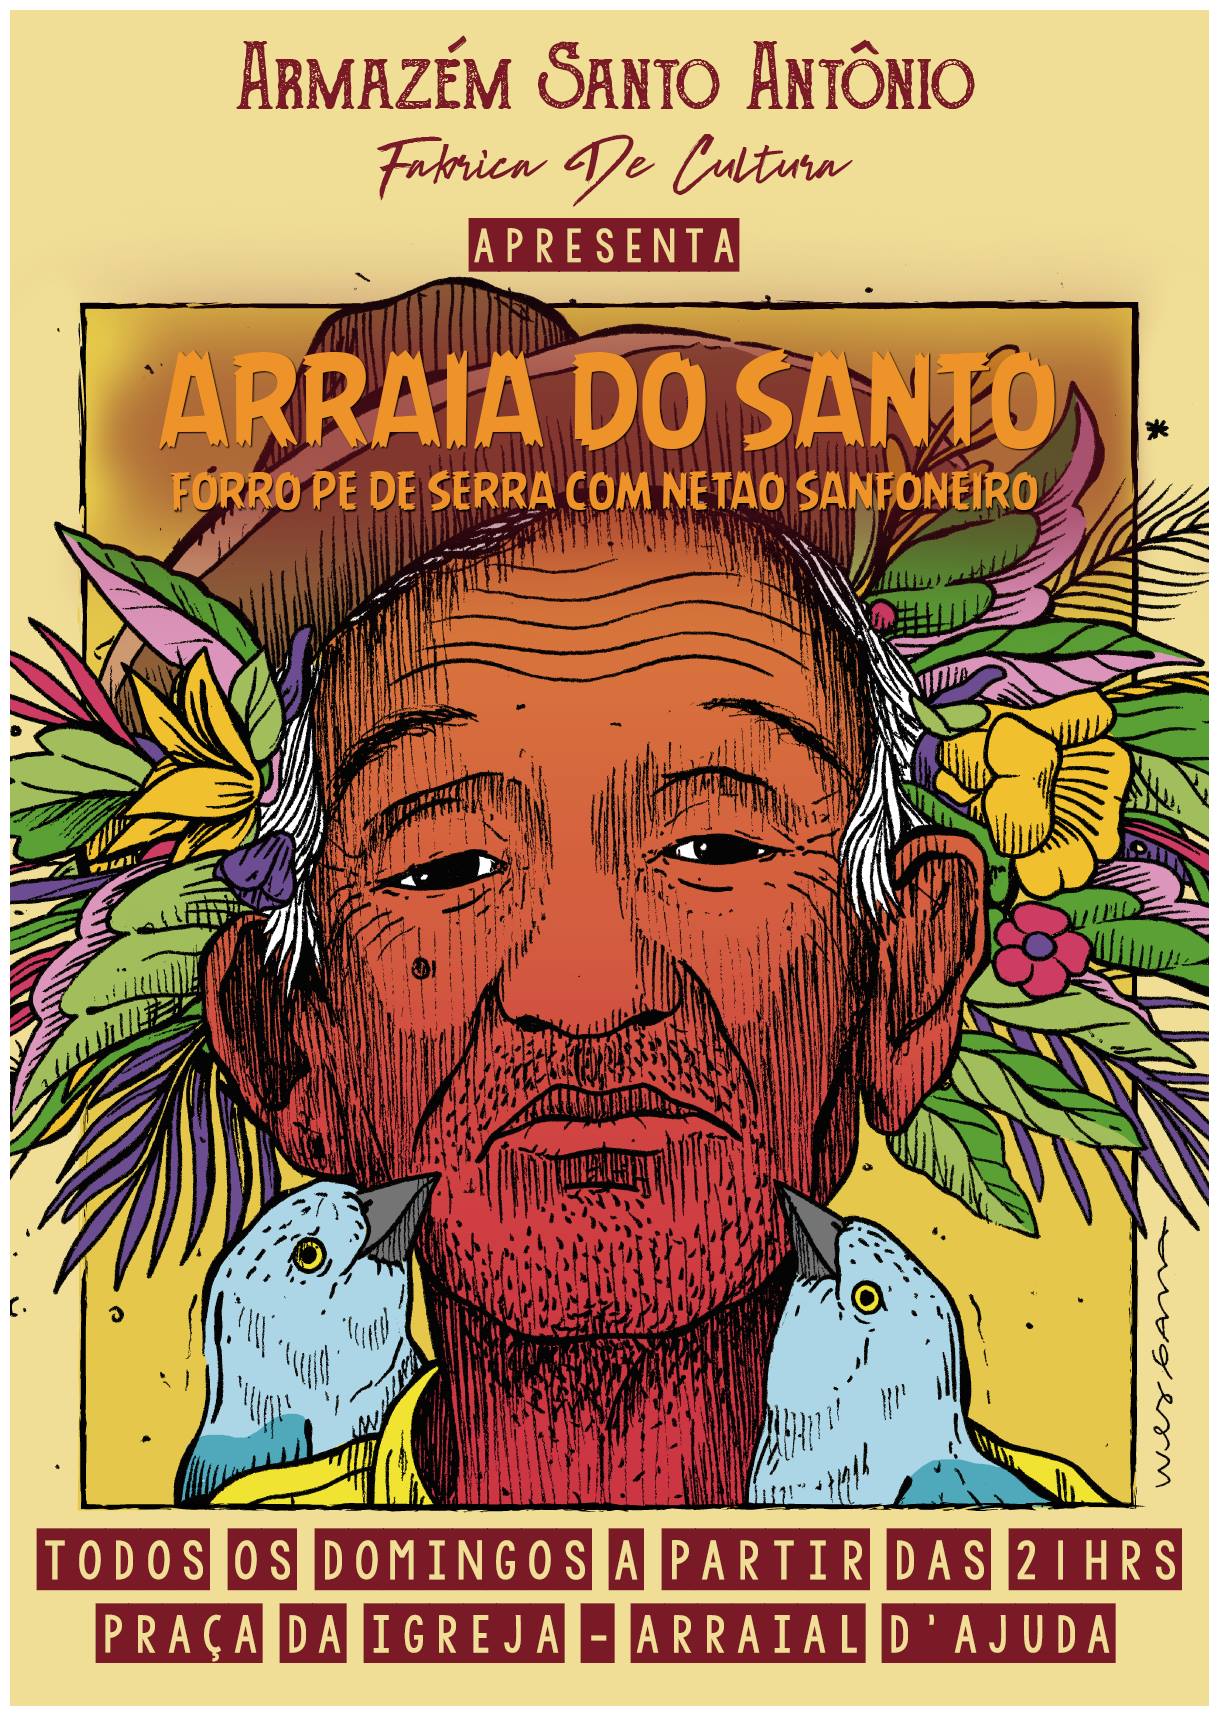 Cartaz  - Armazm Santo Antnio - Praa Brigadeiro Eduardo Gomes, 138, Domingo 29 de Dezembro de 2019